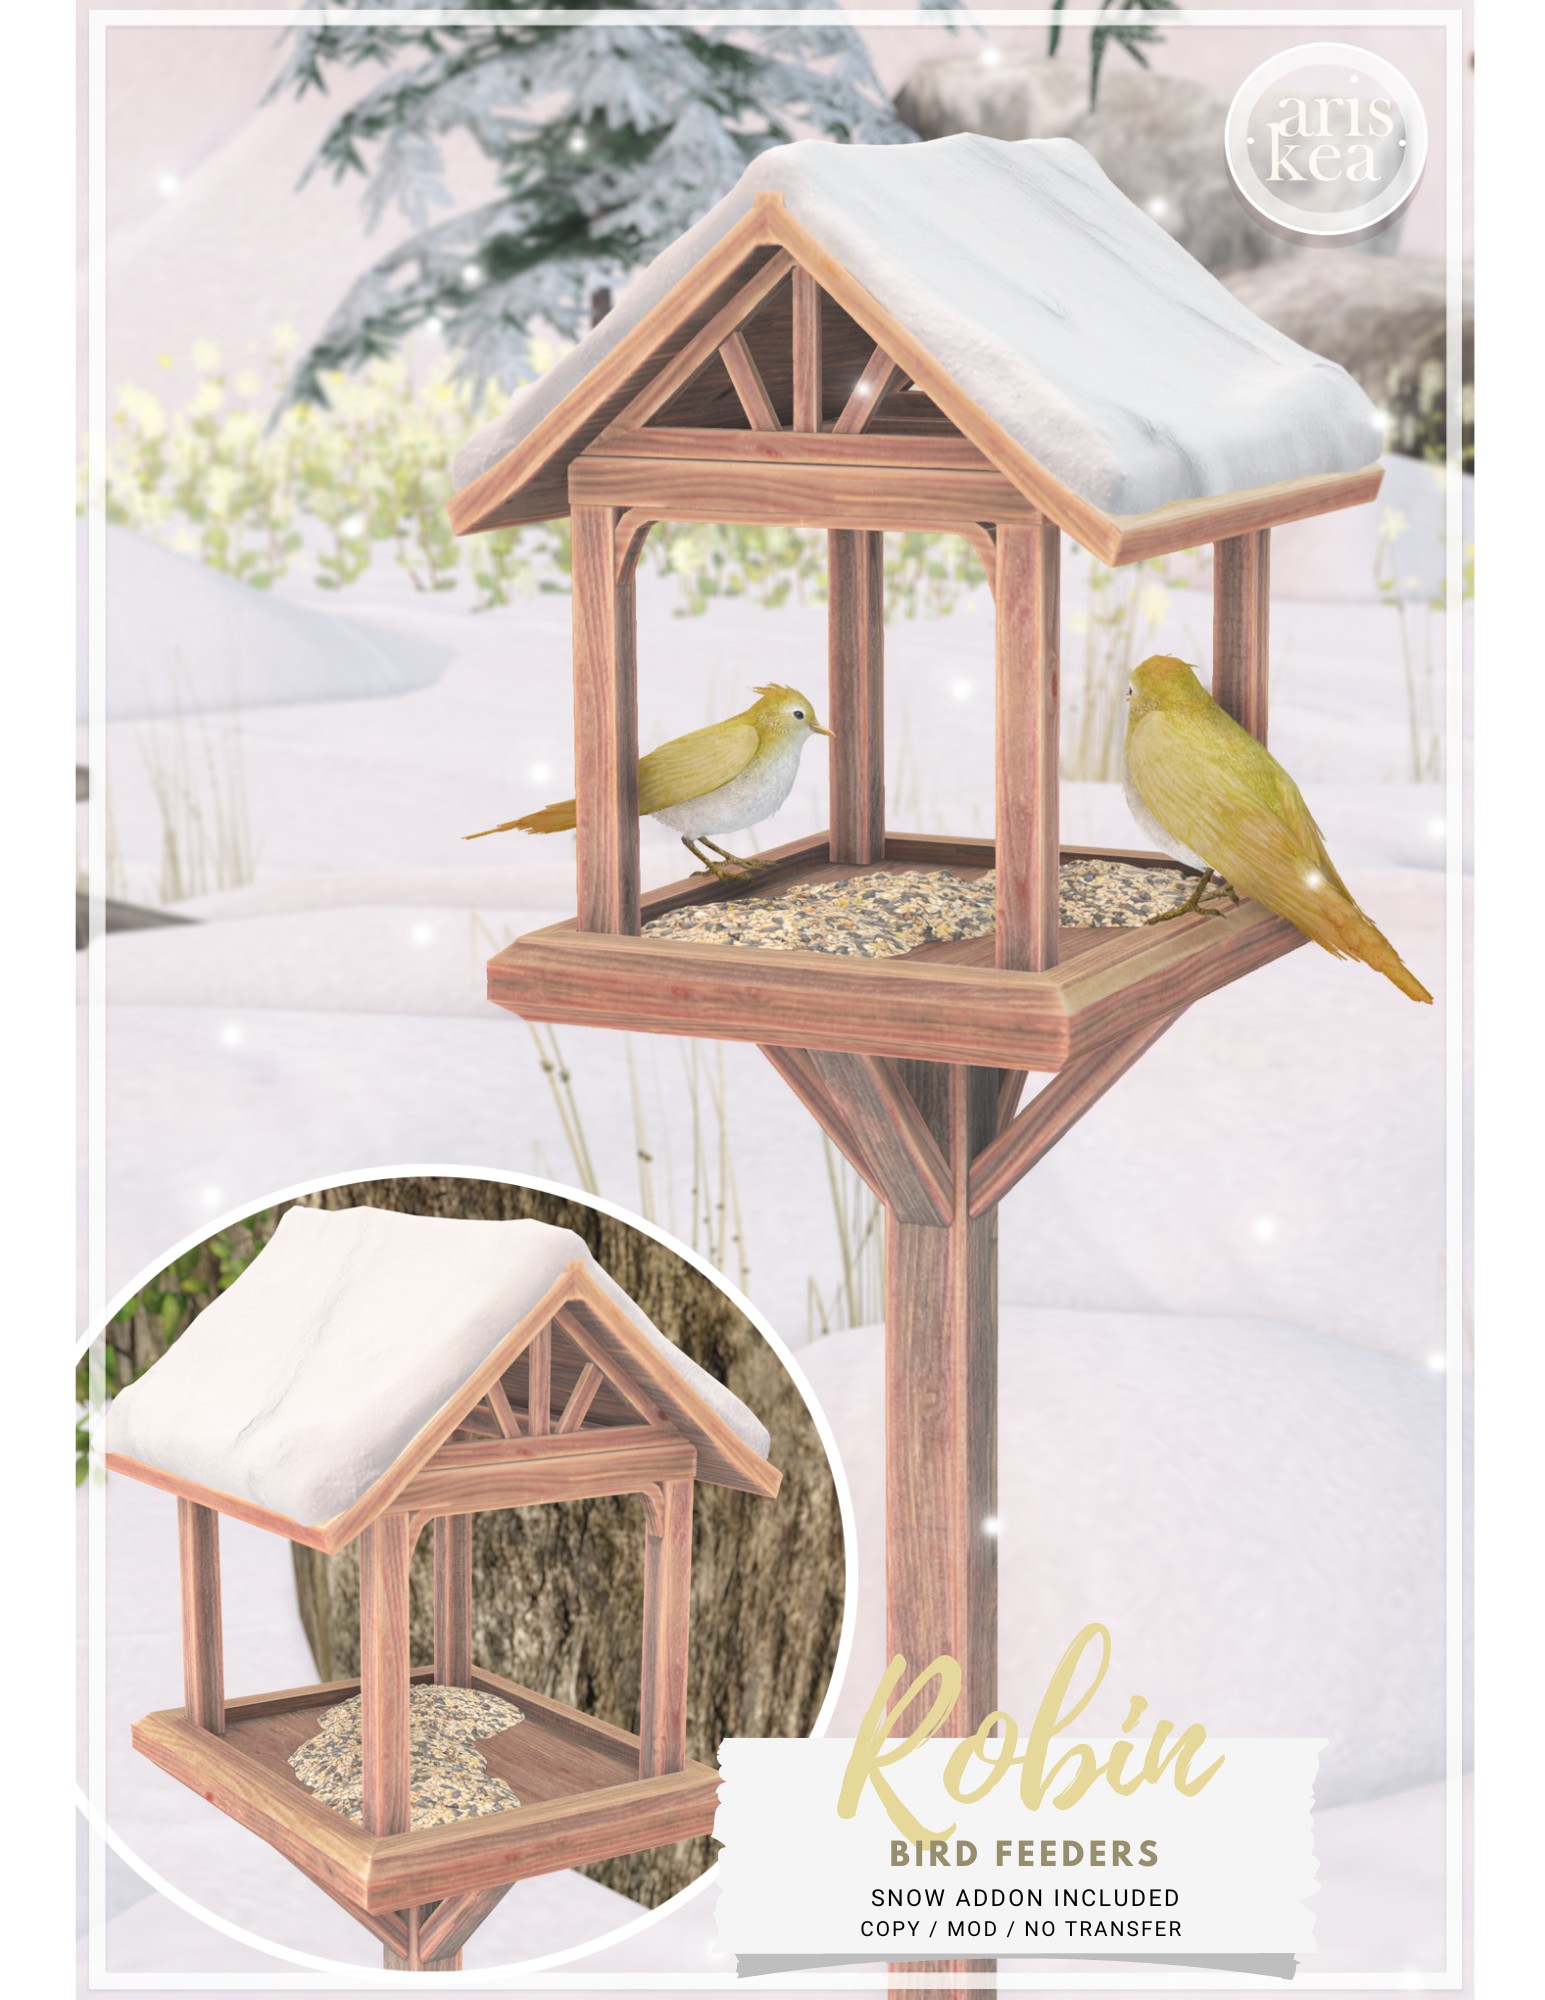 Ariskea – Robin Bird Feeders